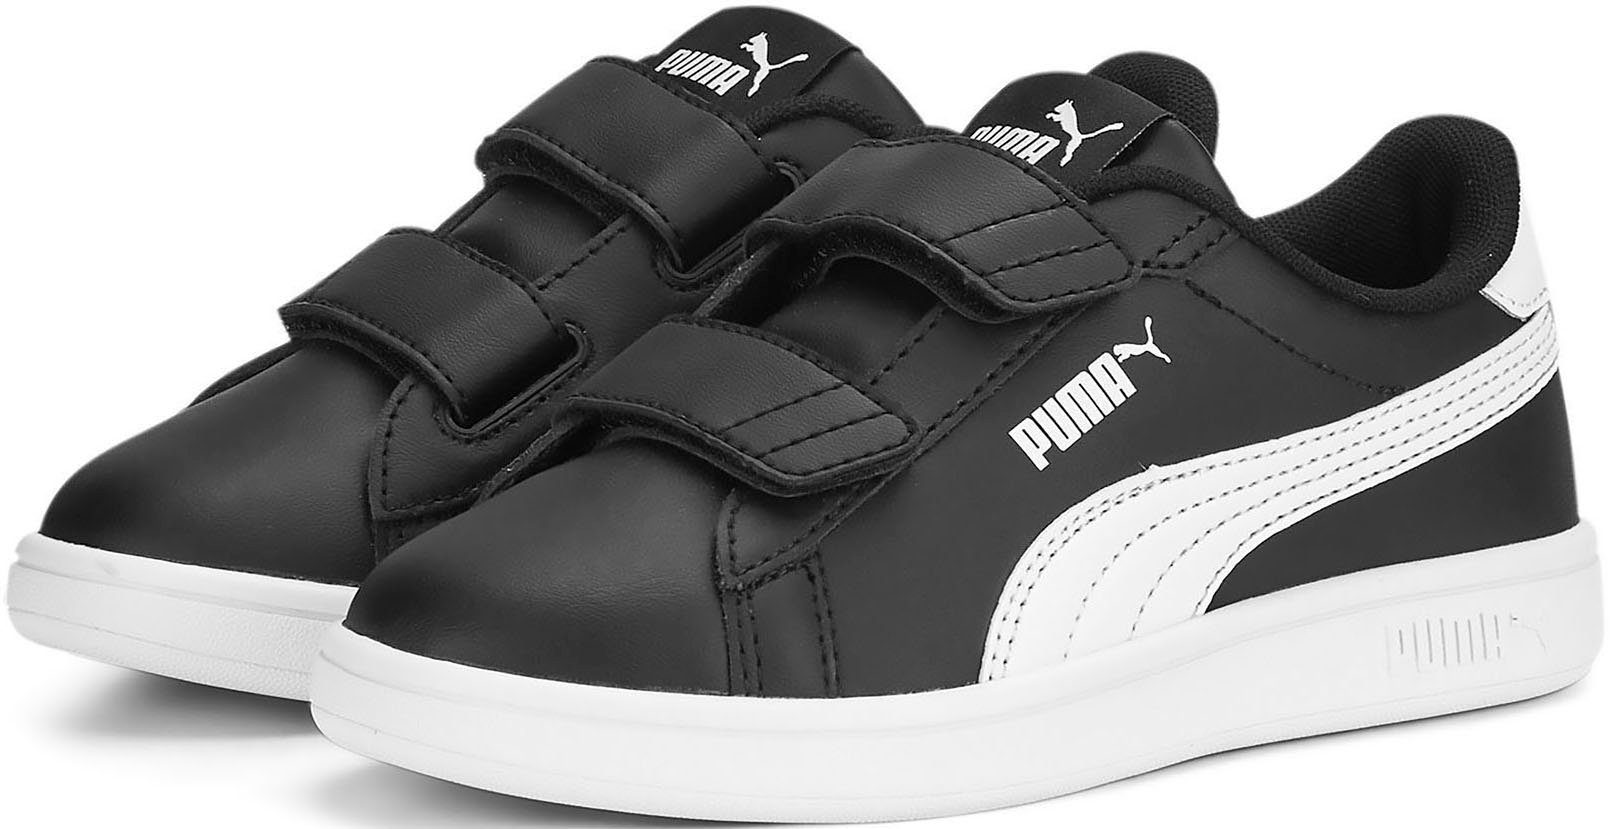 Angebot darbringen PUMA SMASH L PS mit White Sneaker Klettverschluss Black-PUMA PUMA V 3.0